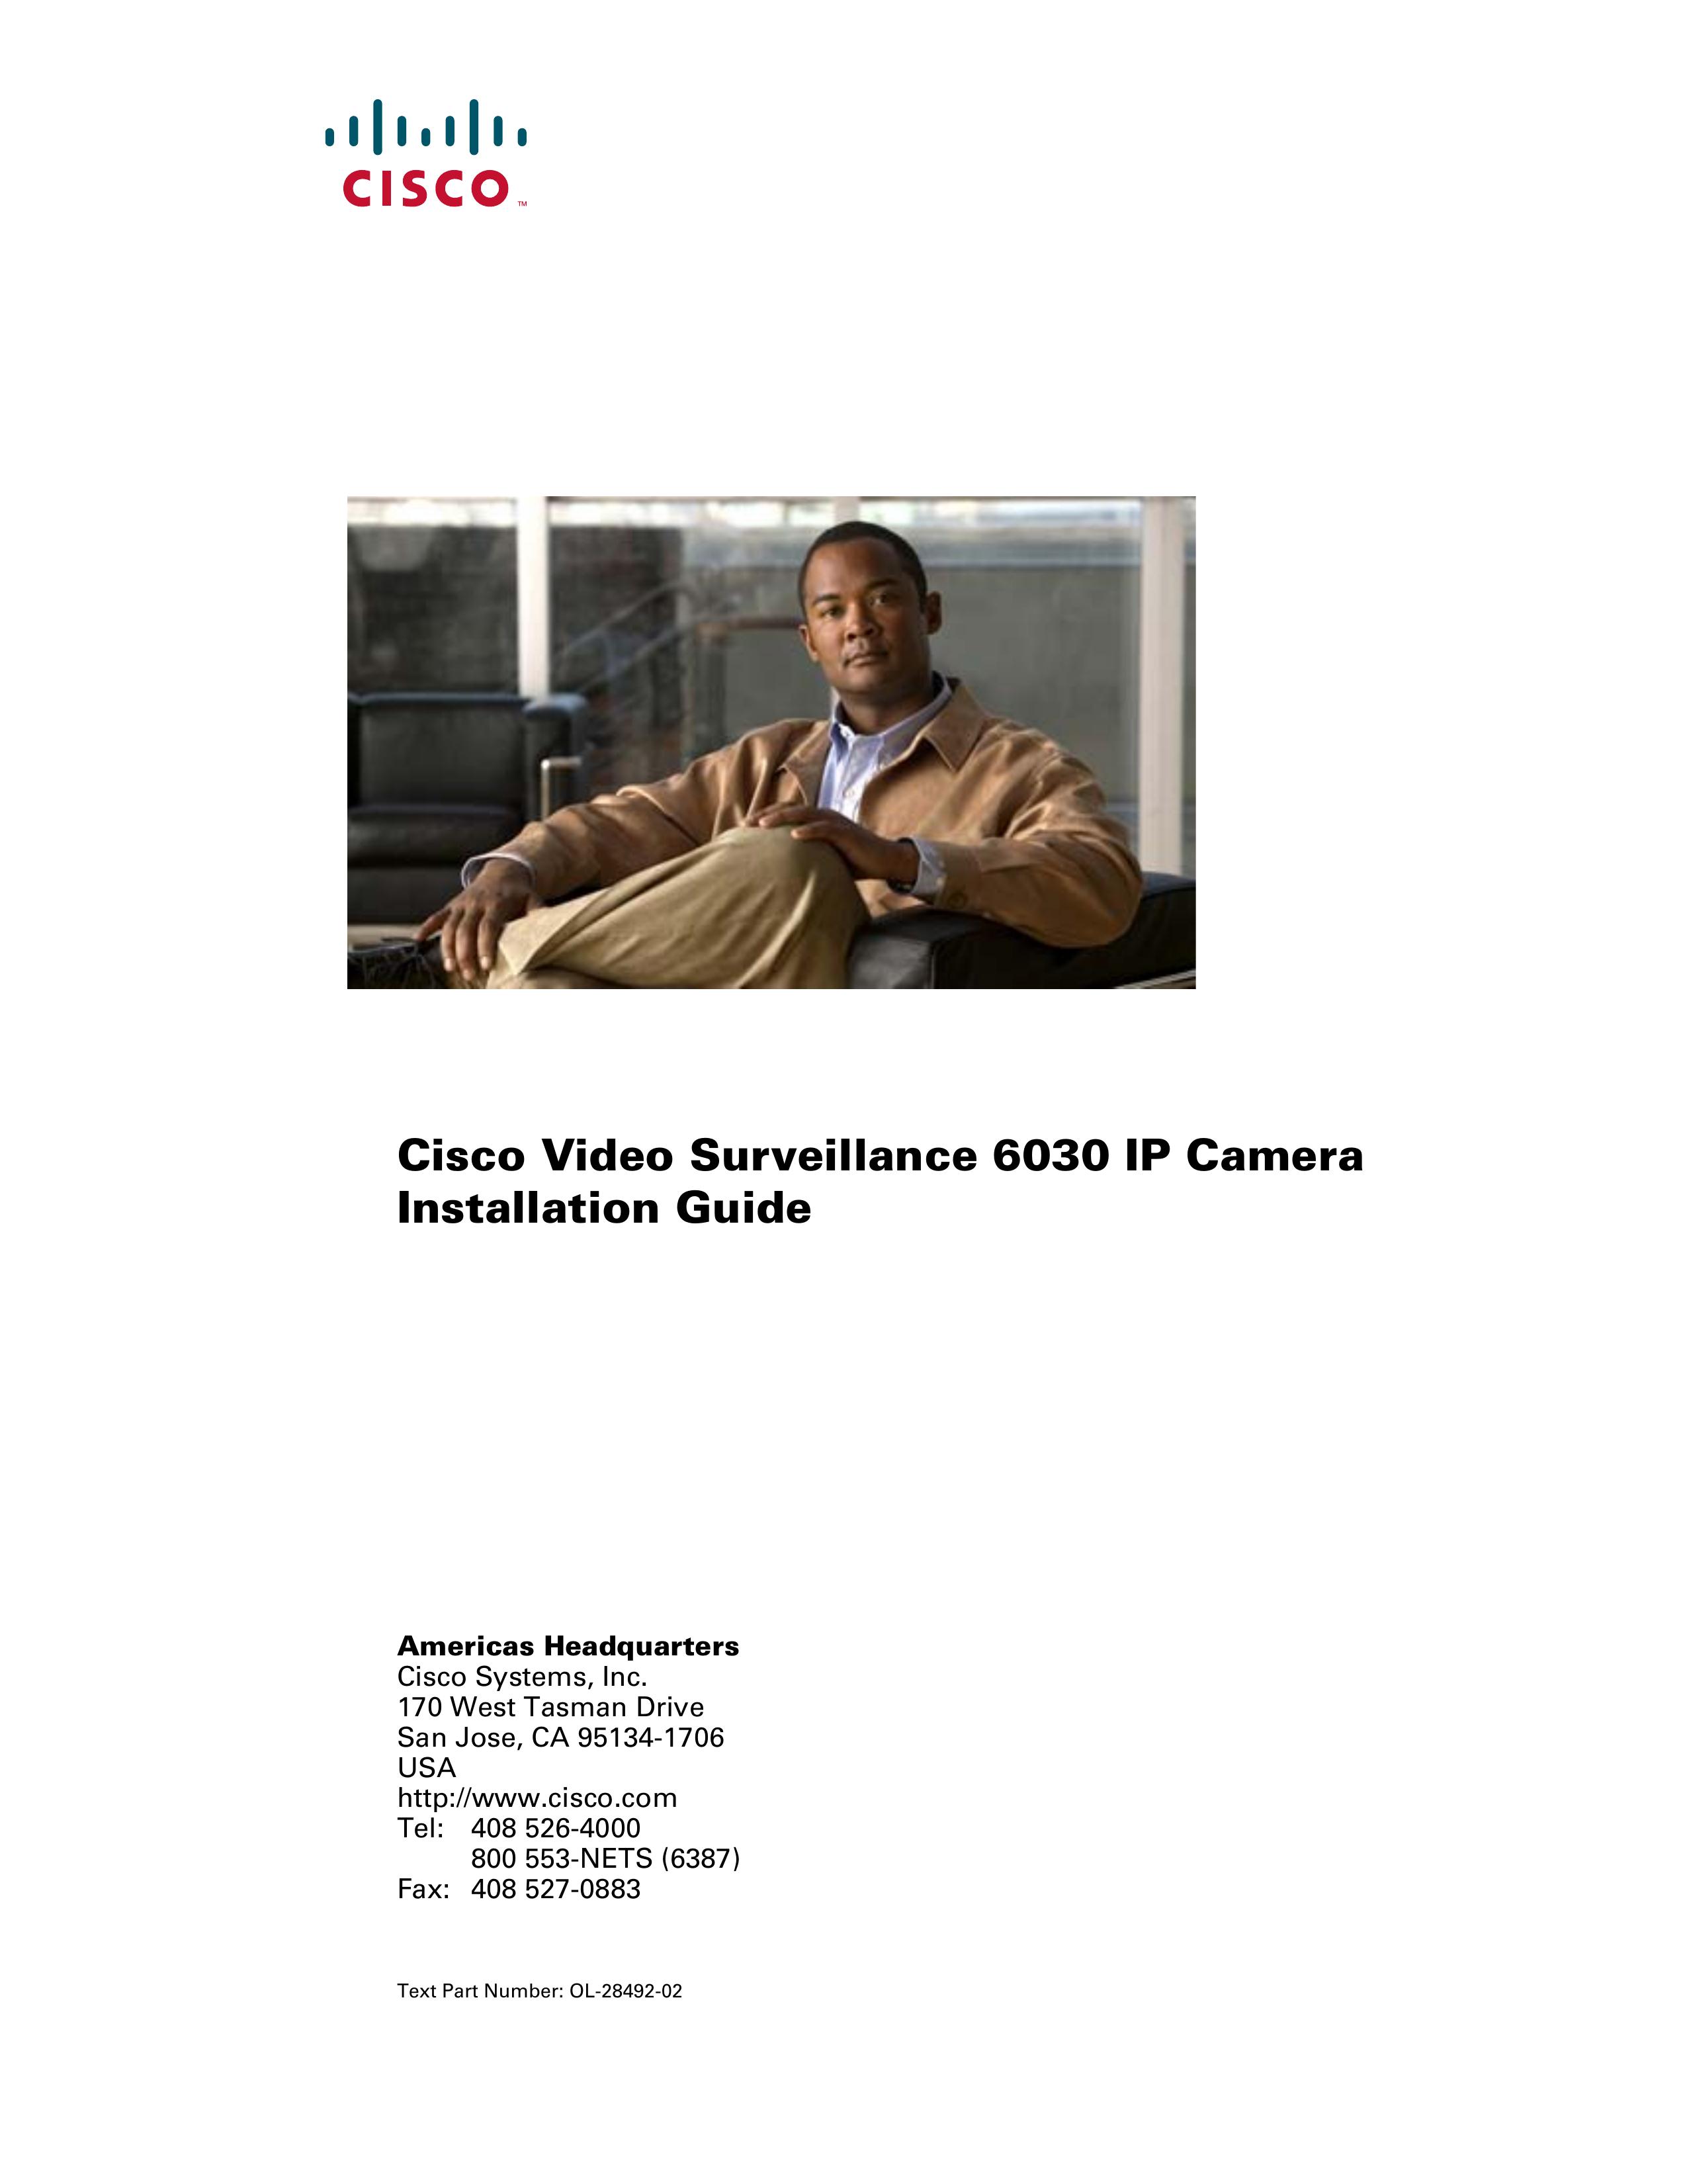 Cisco Systems OL-28492-02 Security Camera User Manual